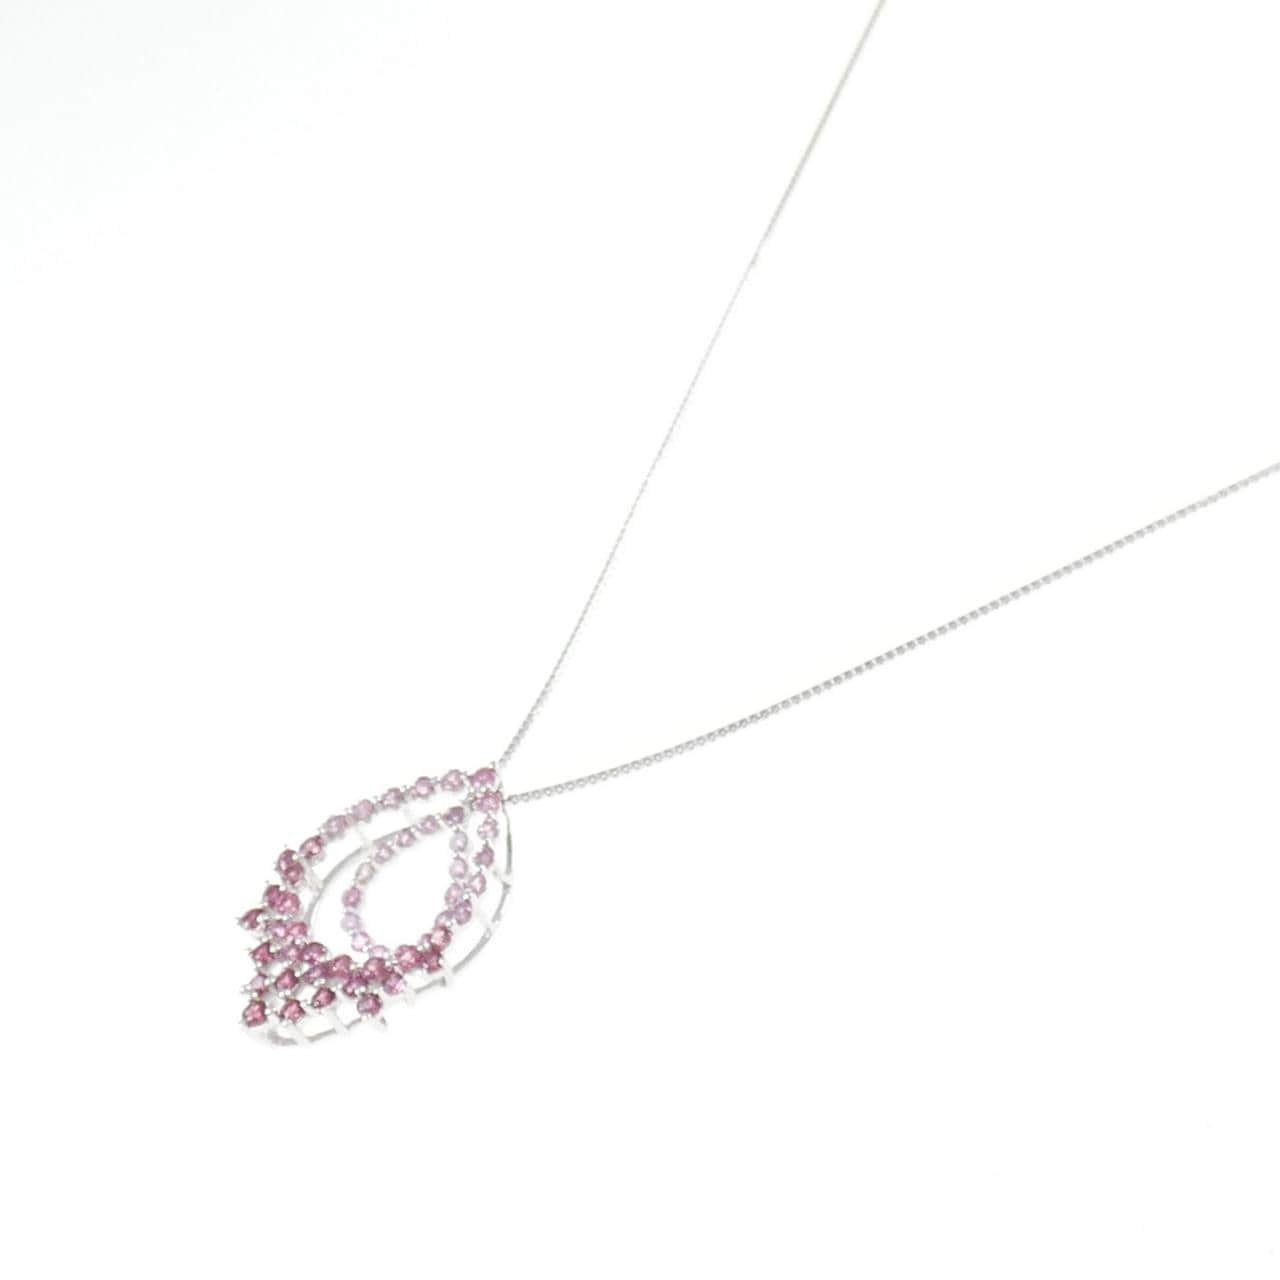 K18WG Spinel necklace 0.90CT